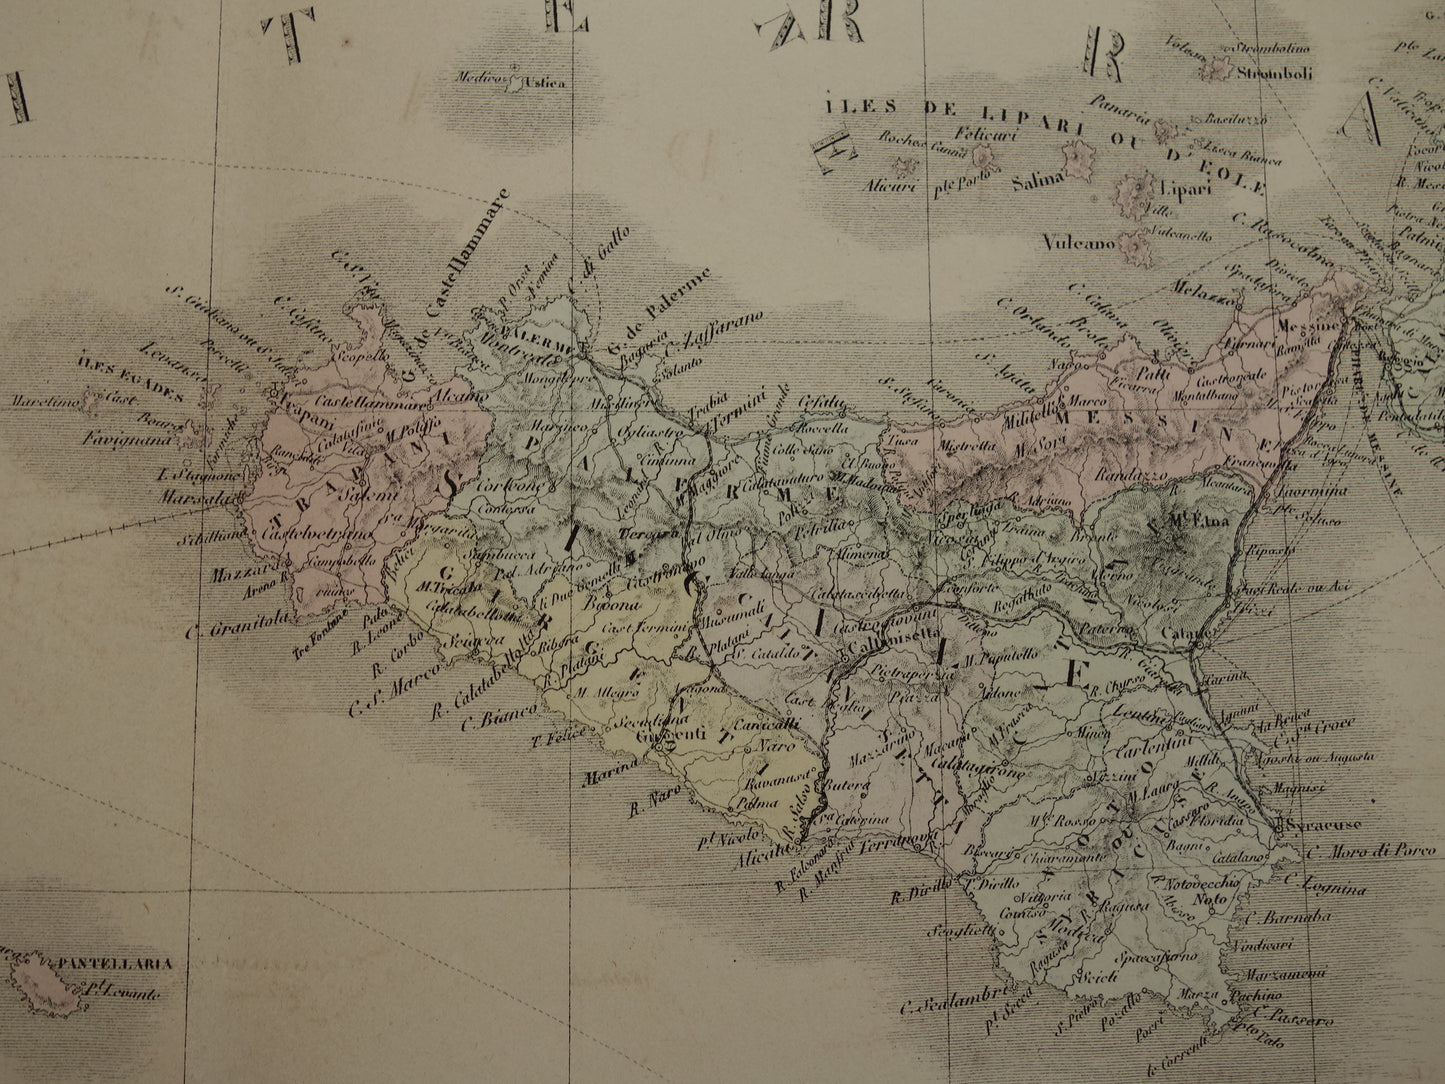 ITALIË oude kaart van Zuid-Italië met Sicilië Grote originele antieke landkaart van zuiden Italië uit 1876